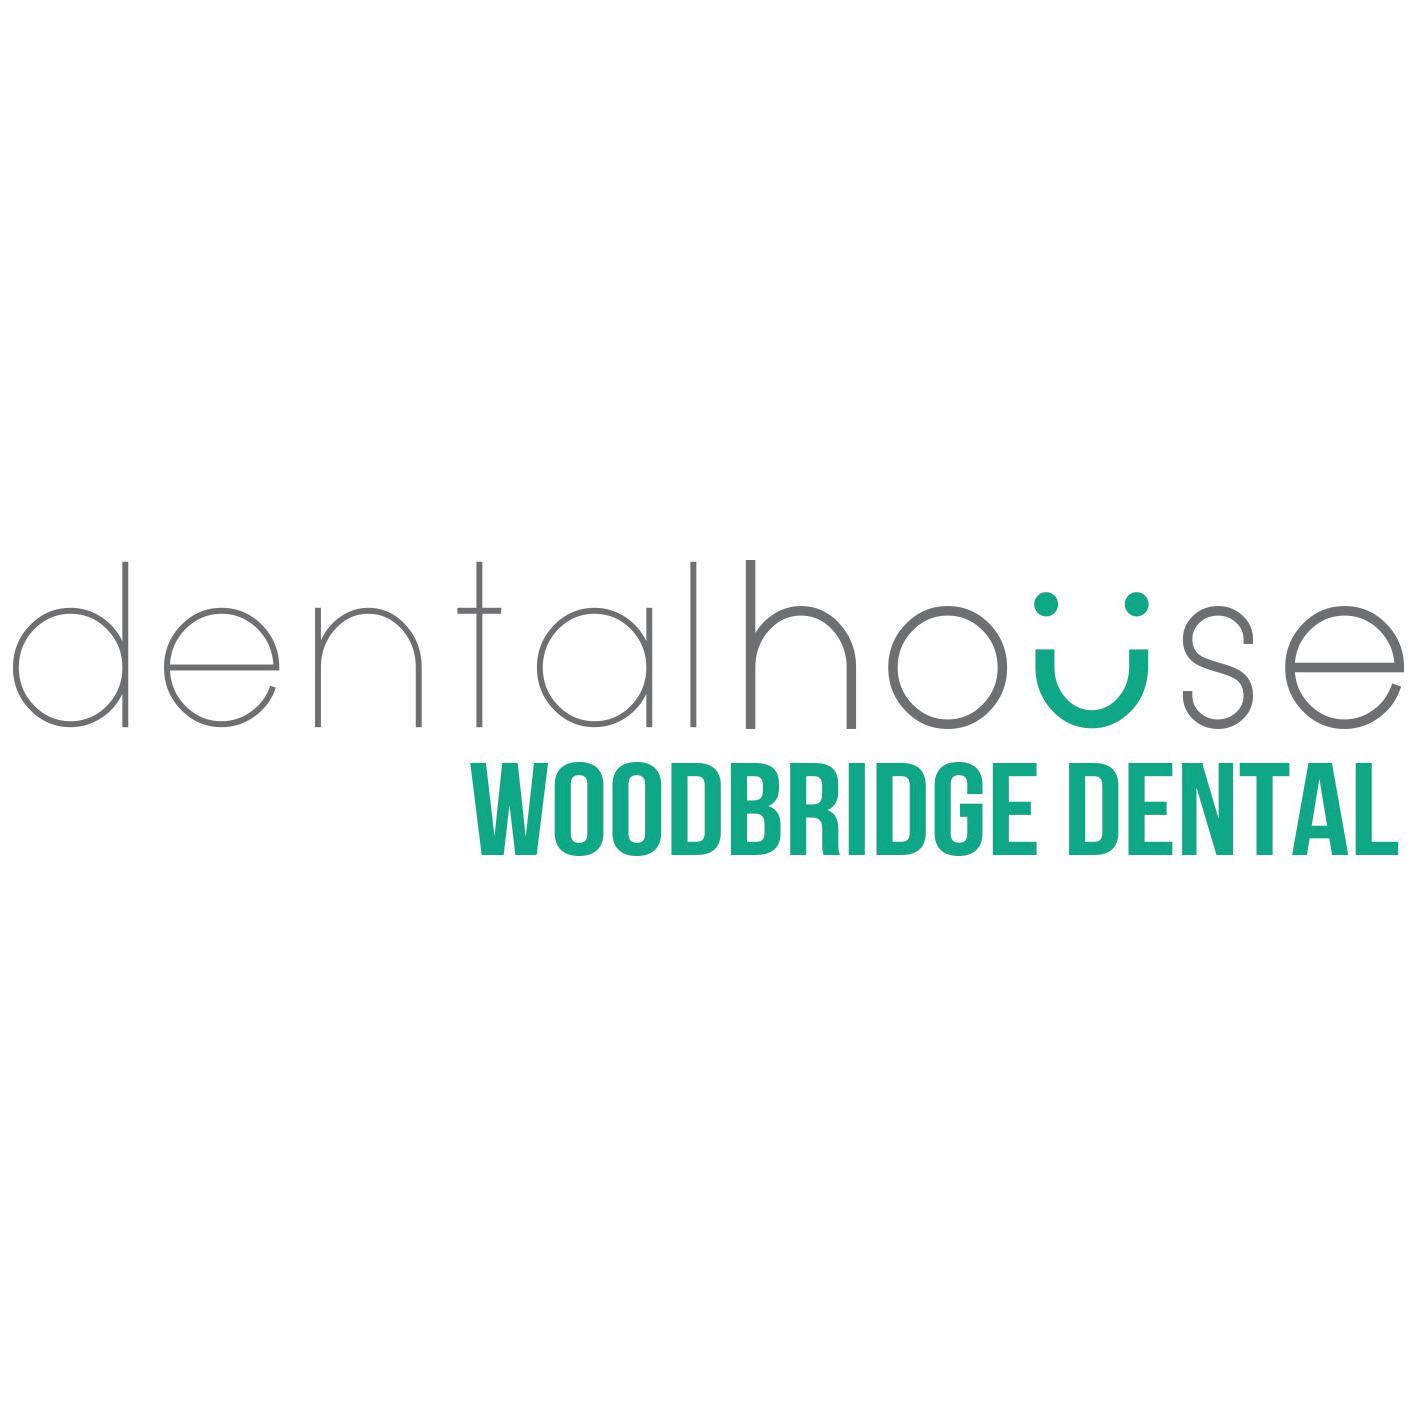 dentalhouse - Woodbridge Dental